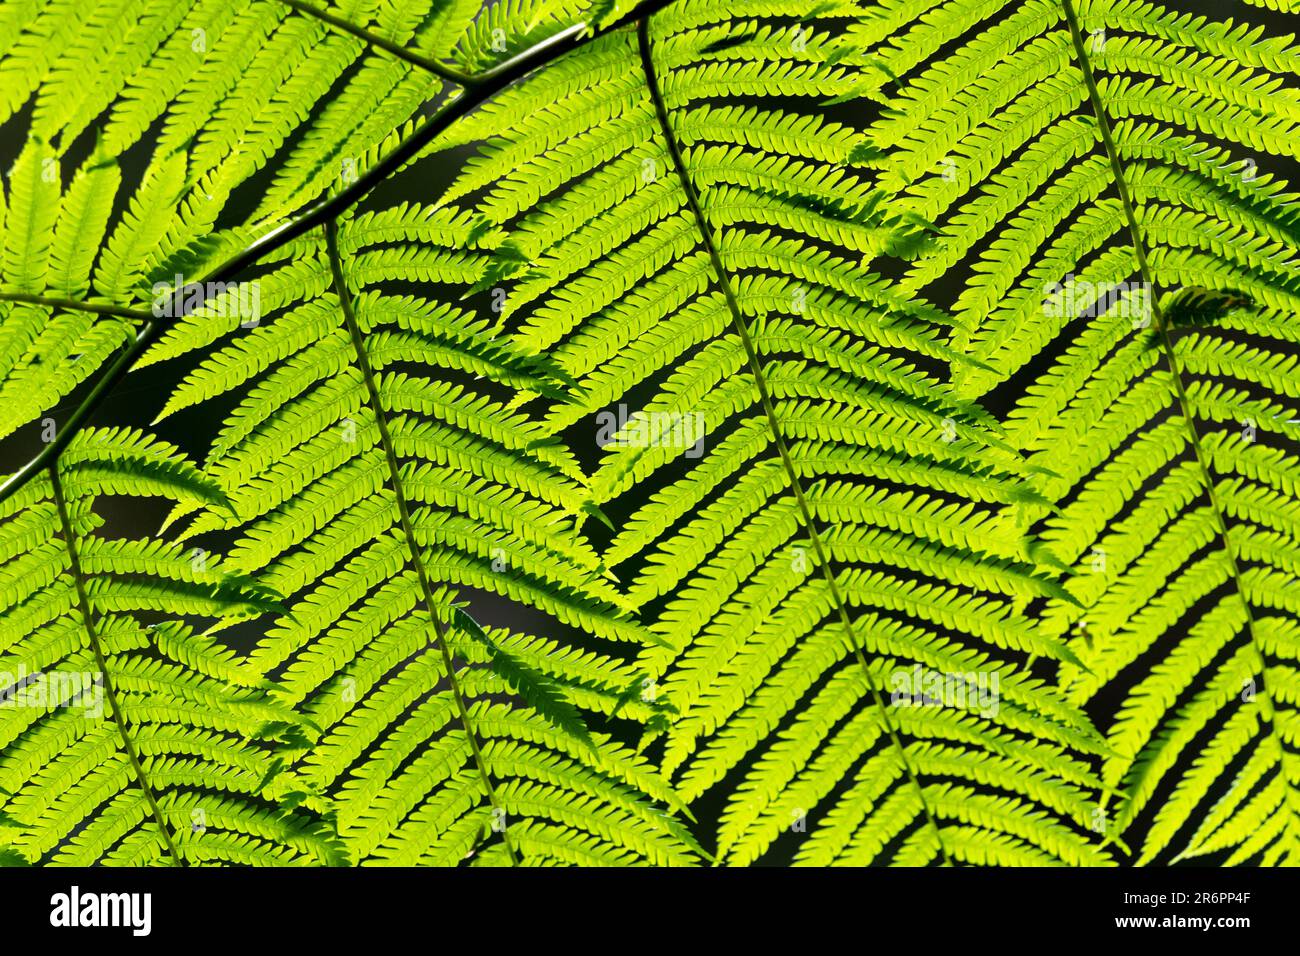 Bright green, healthy fern plants seen in Australian rainforest with close detail, blurred dark background. Stock Photo